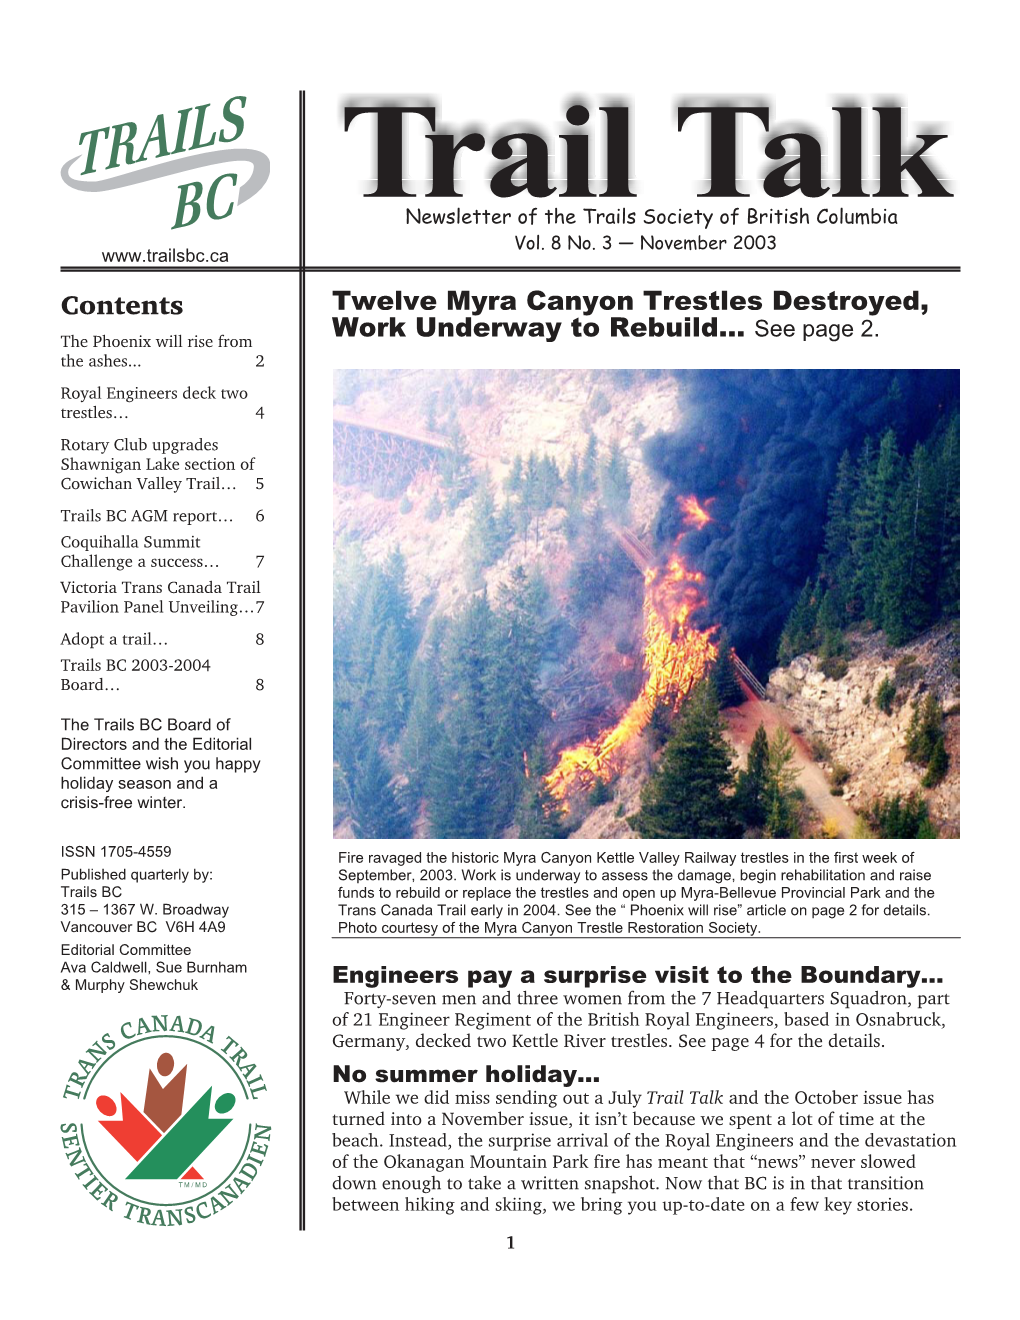 Trails BC AGM Report… 6 Coquihalla Summit Challenge a Success… 7 Victoria Trans Canada Trail Pavilion Panel Unveiling…7 Adopt a Trail… 8 Trails BC 2003-2004 Board… 8